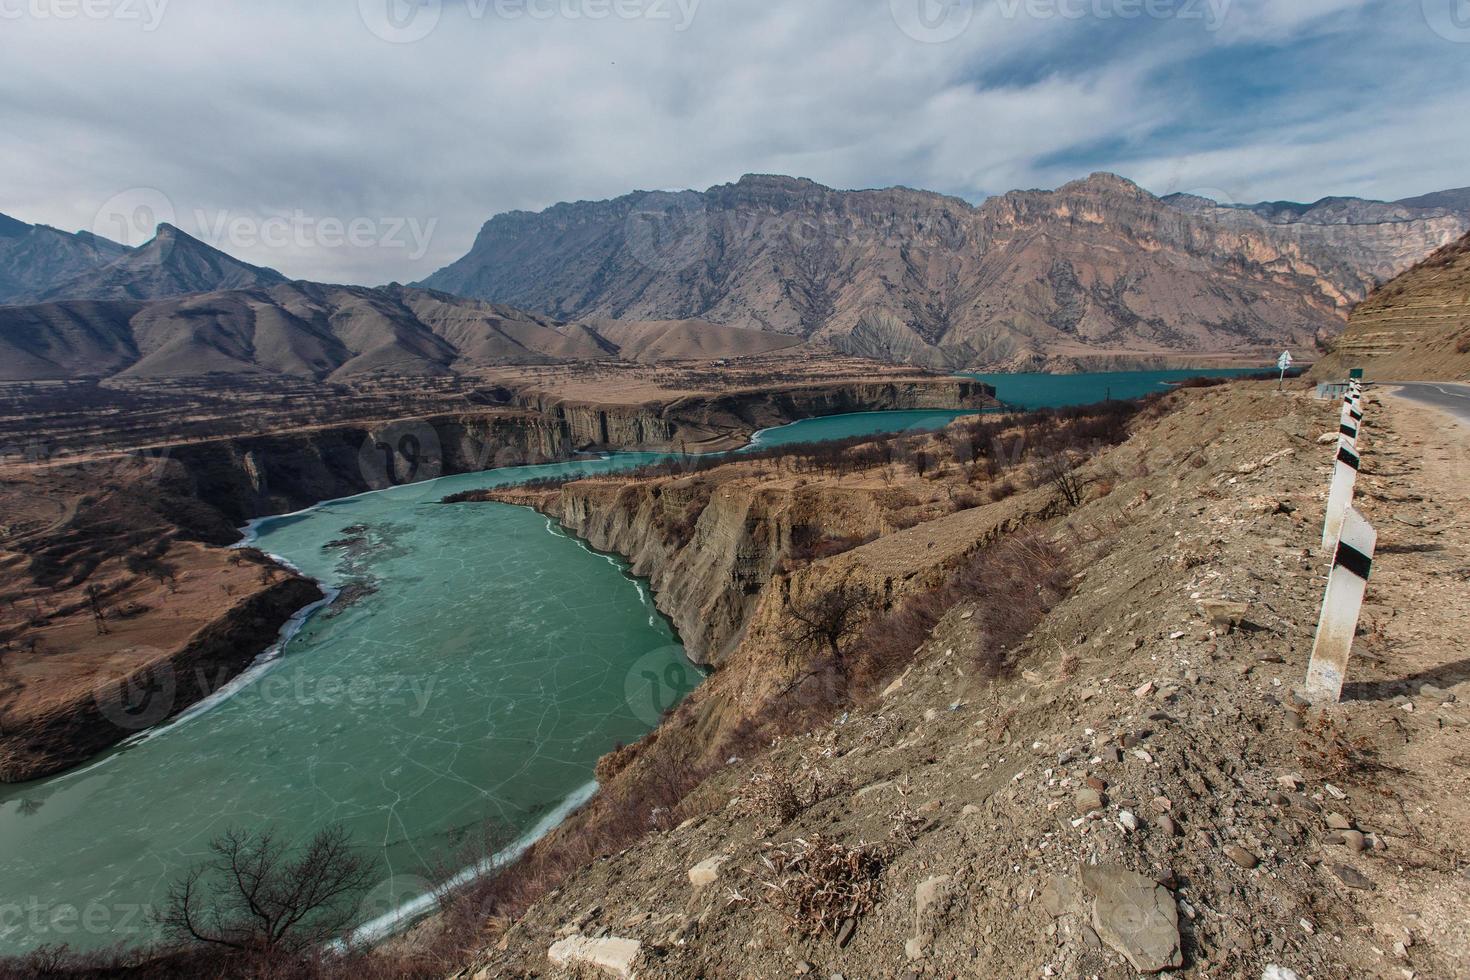 sulak-canyon. chirkeyskaya hpp.natuur van de Kaukasus. Dagestan, Rusland. foto